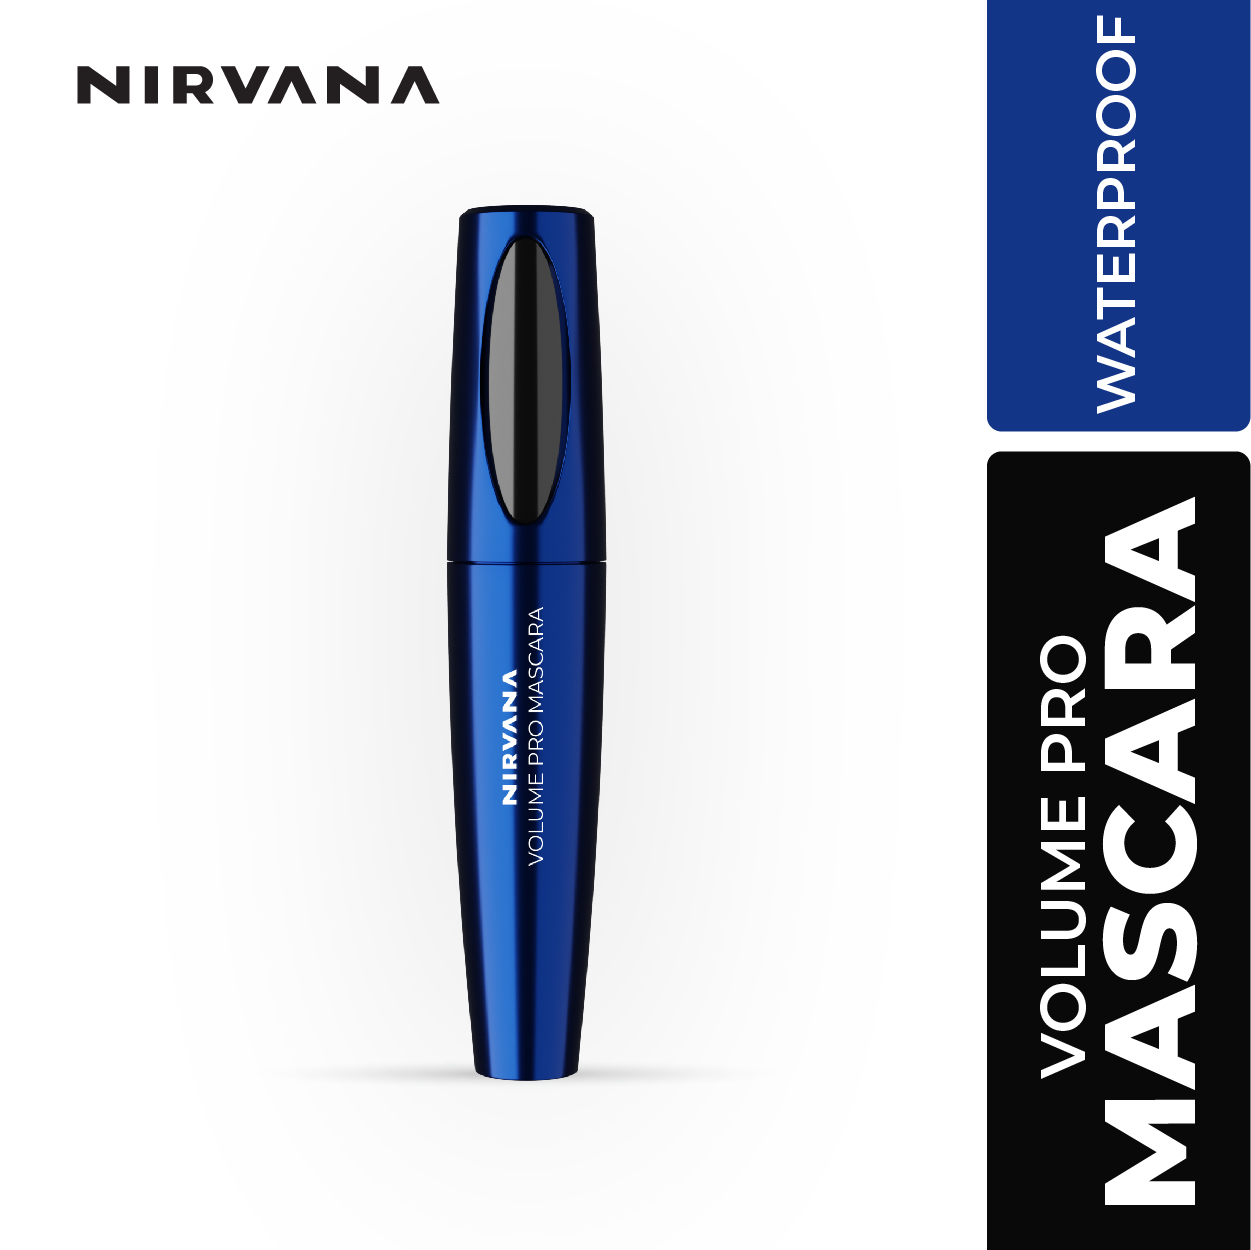 Nirvana Color Volume Pro Mascara